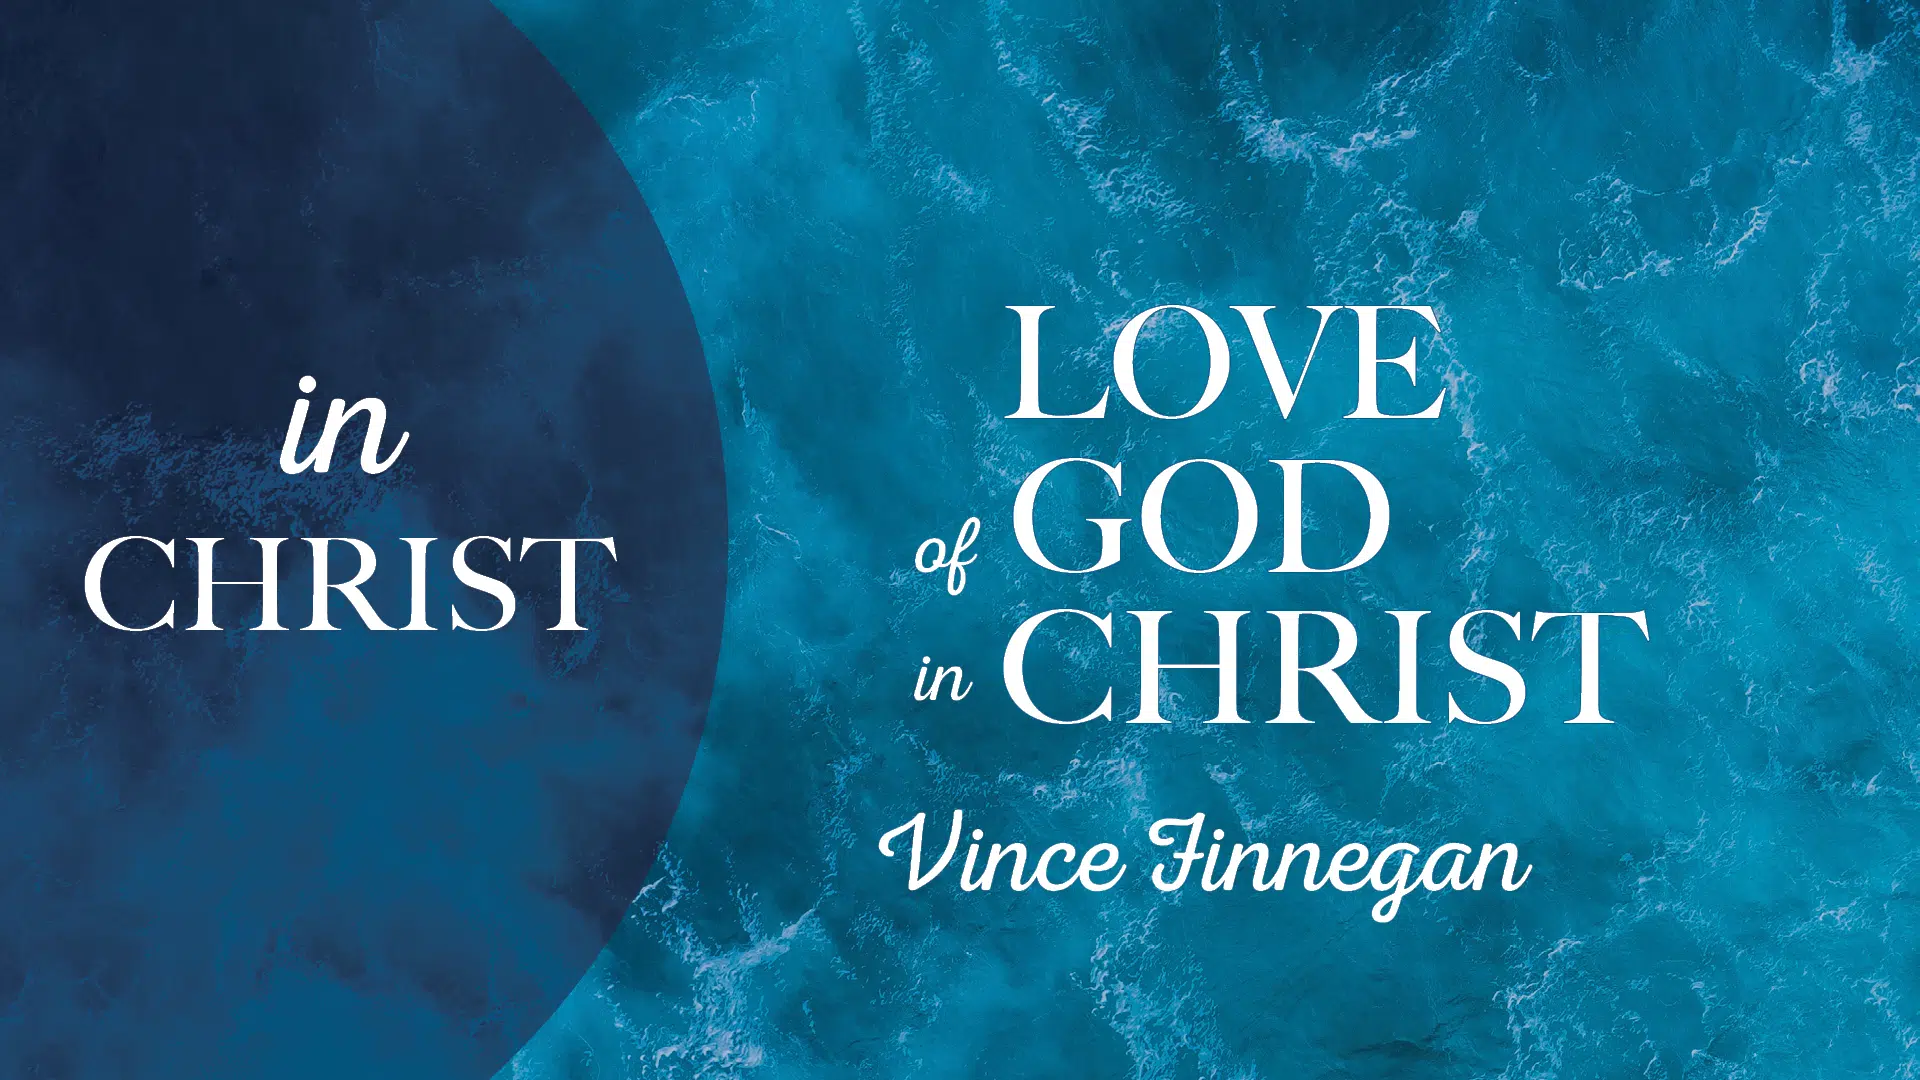 Love of God in Christ